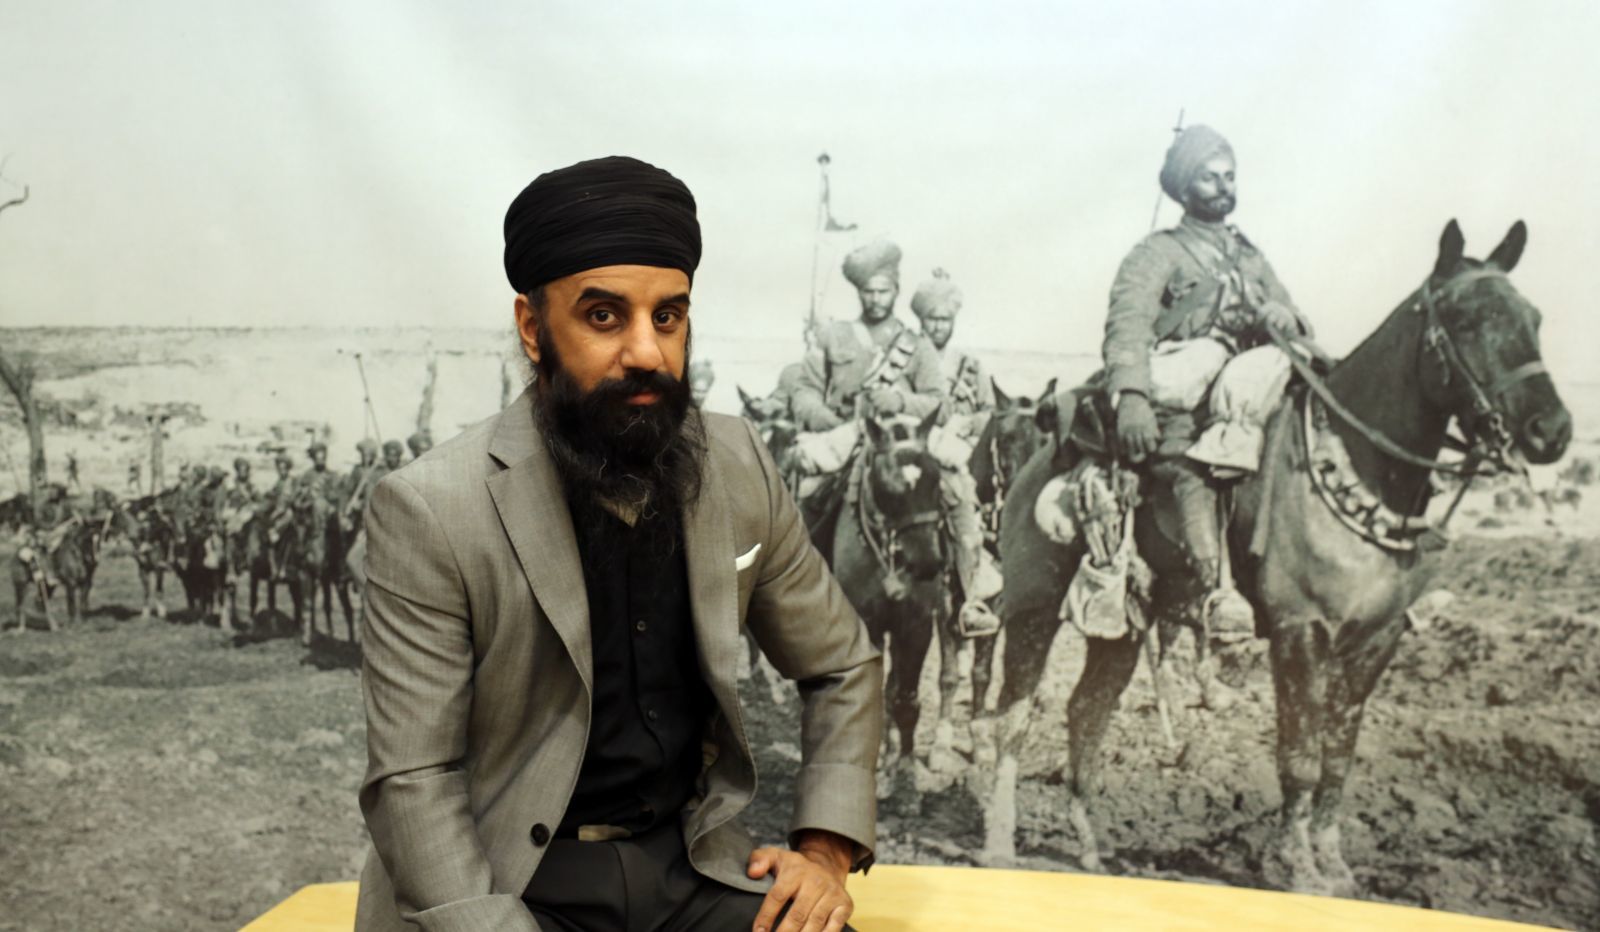 Pardeep Nagra, Executive Director, Sikh Heritage Museum of Canada